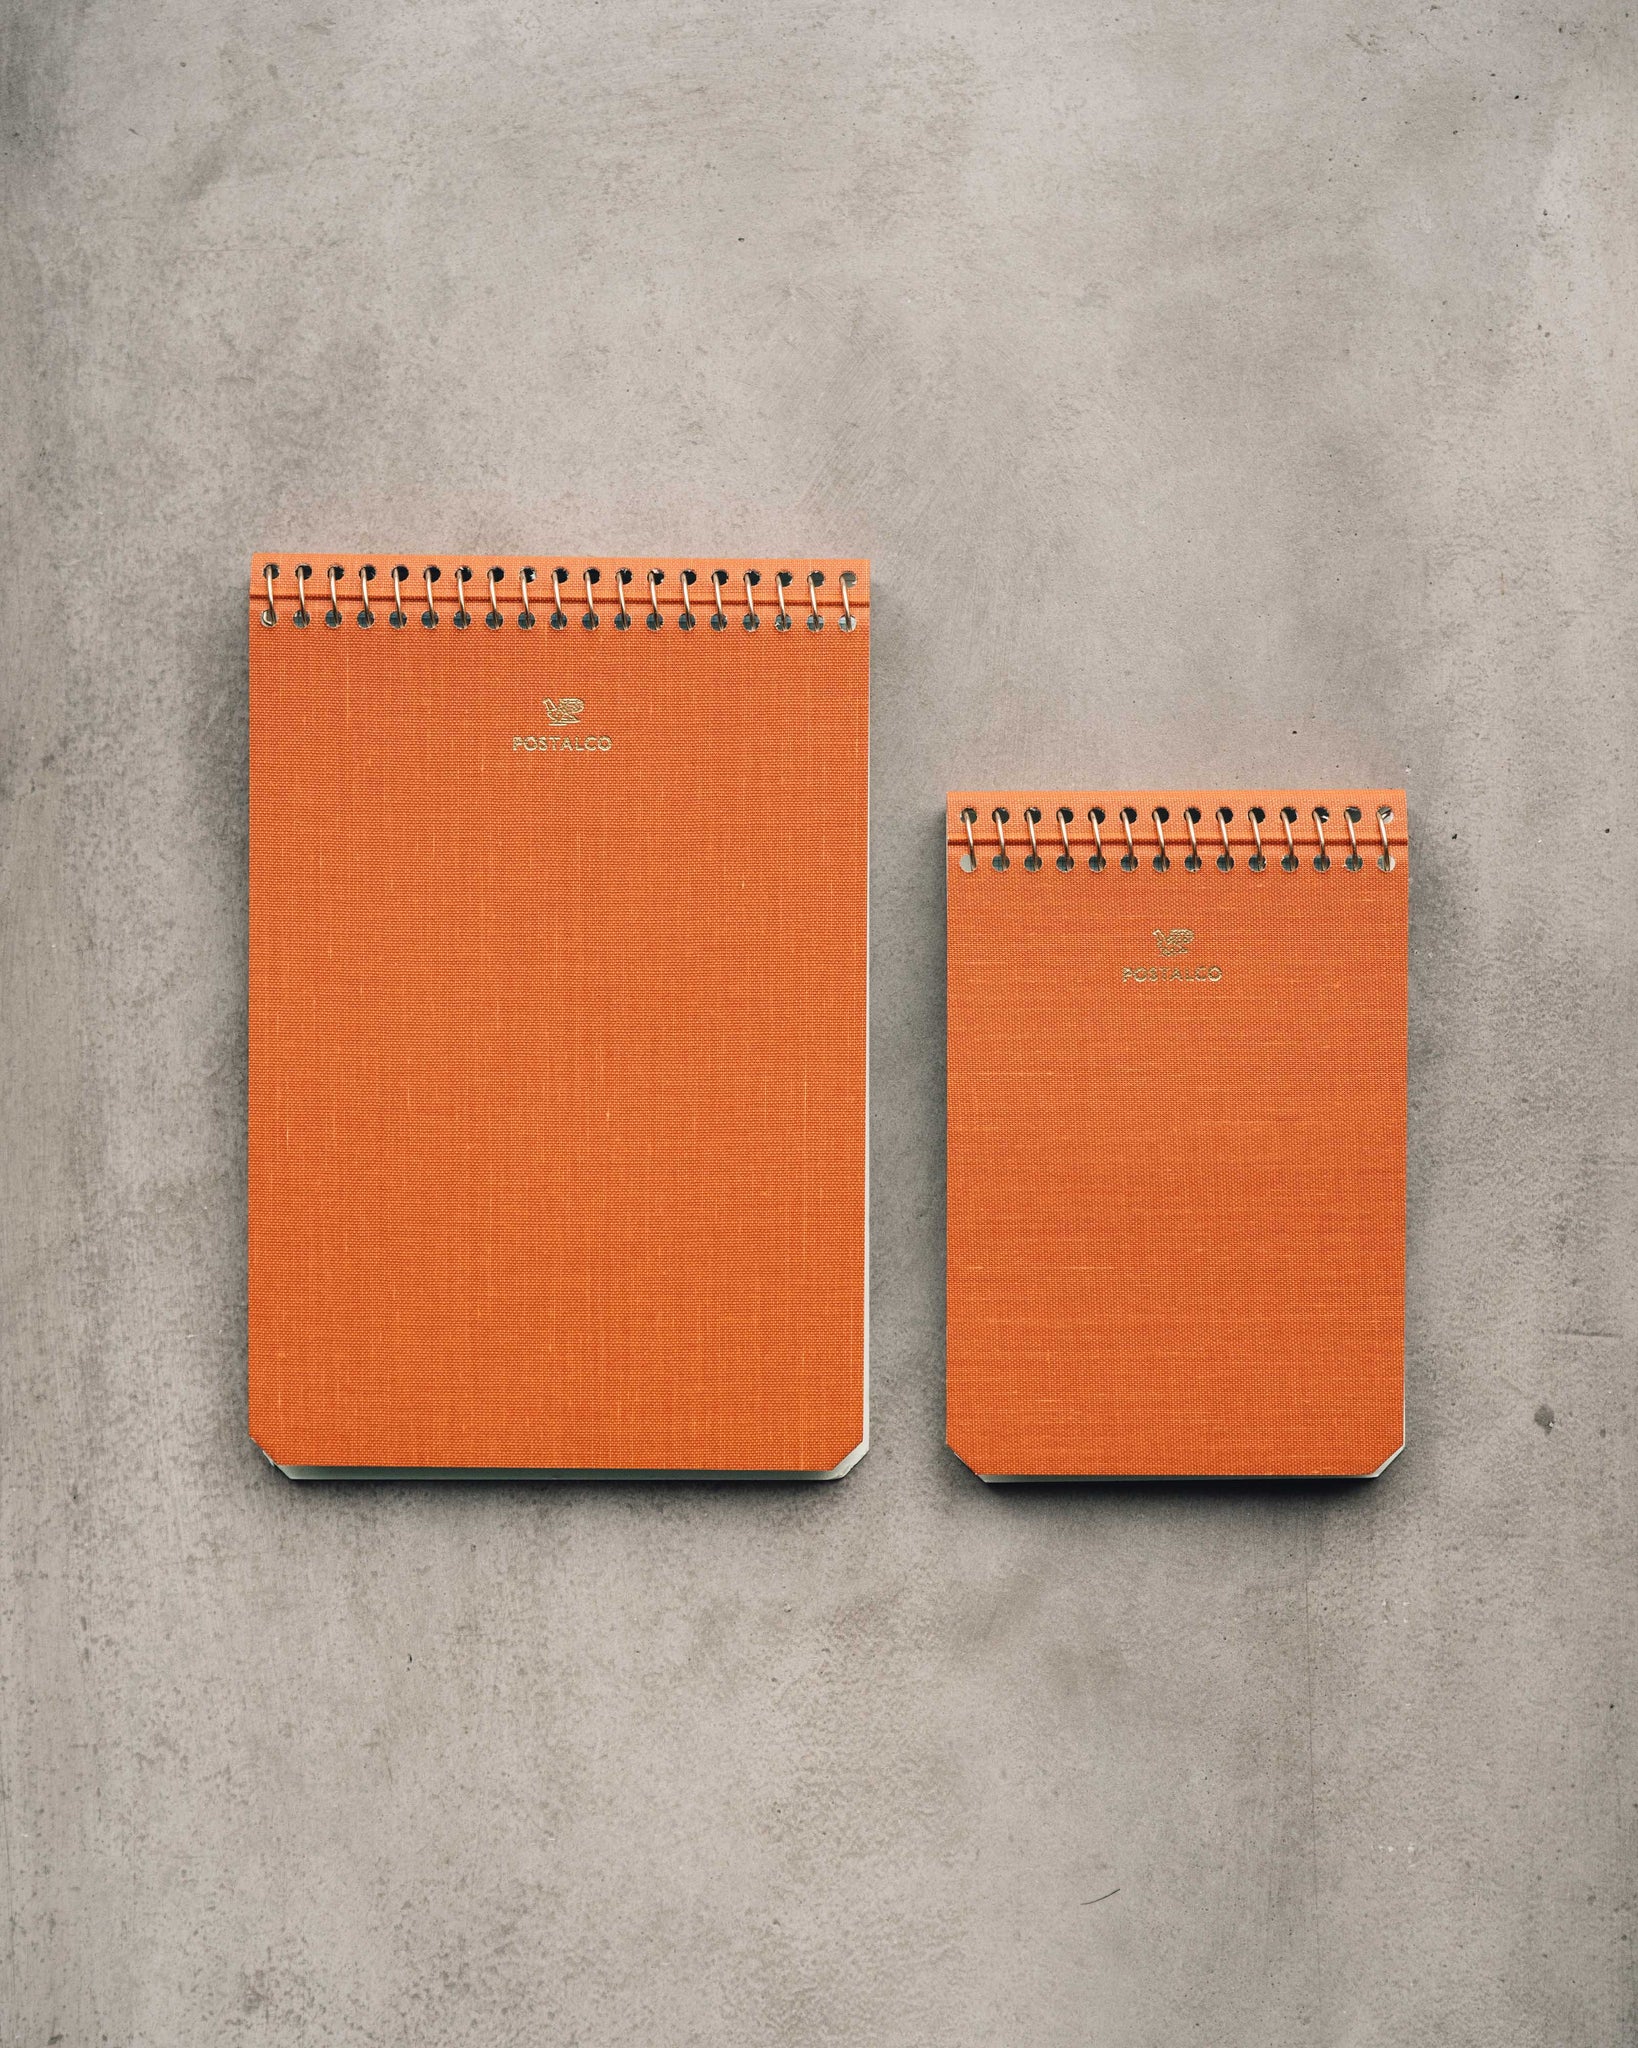 Postalco Tangerine Notebooks